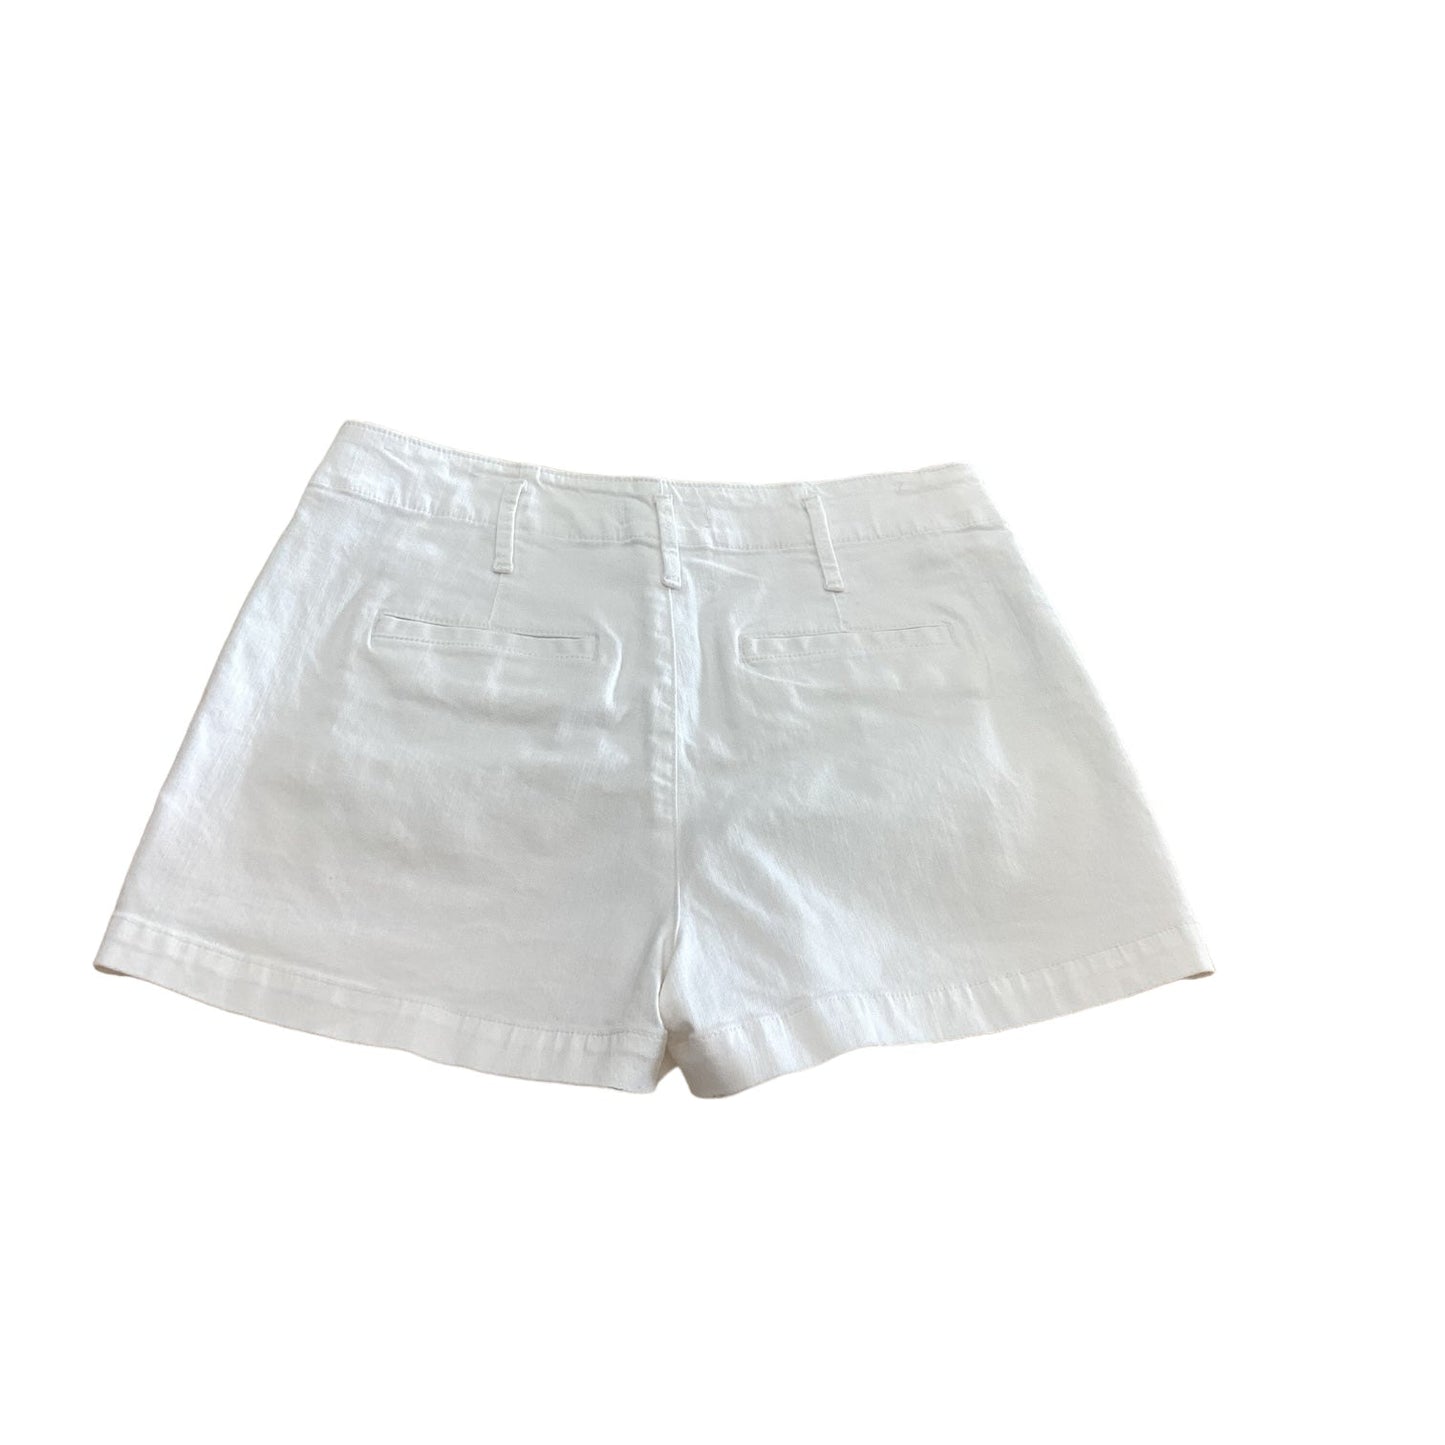 White Shorts Loft, Size 6